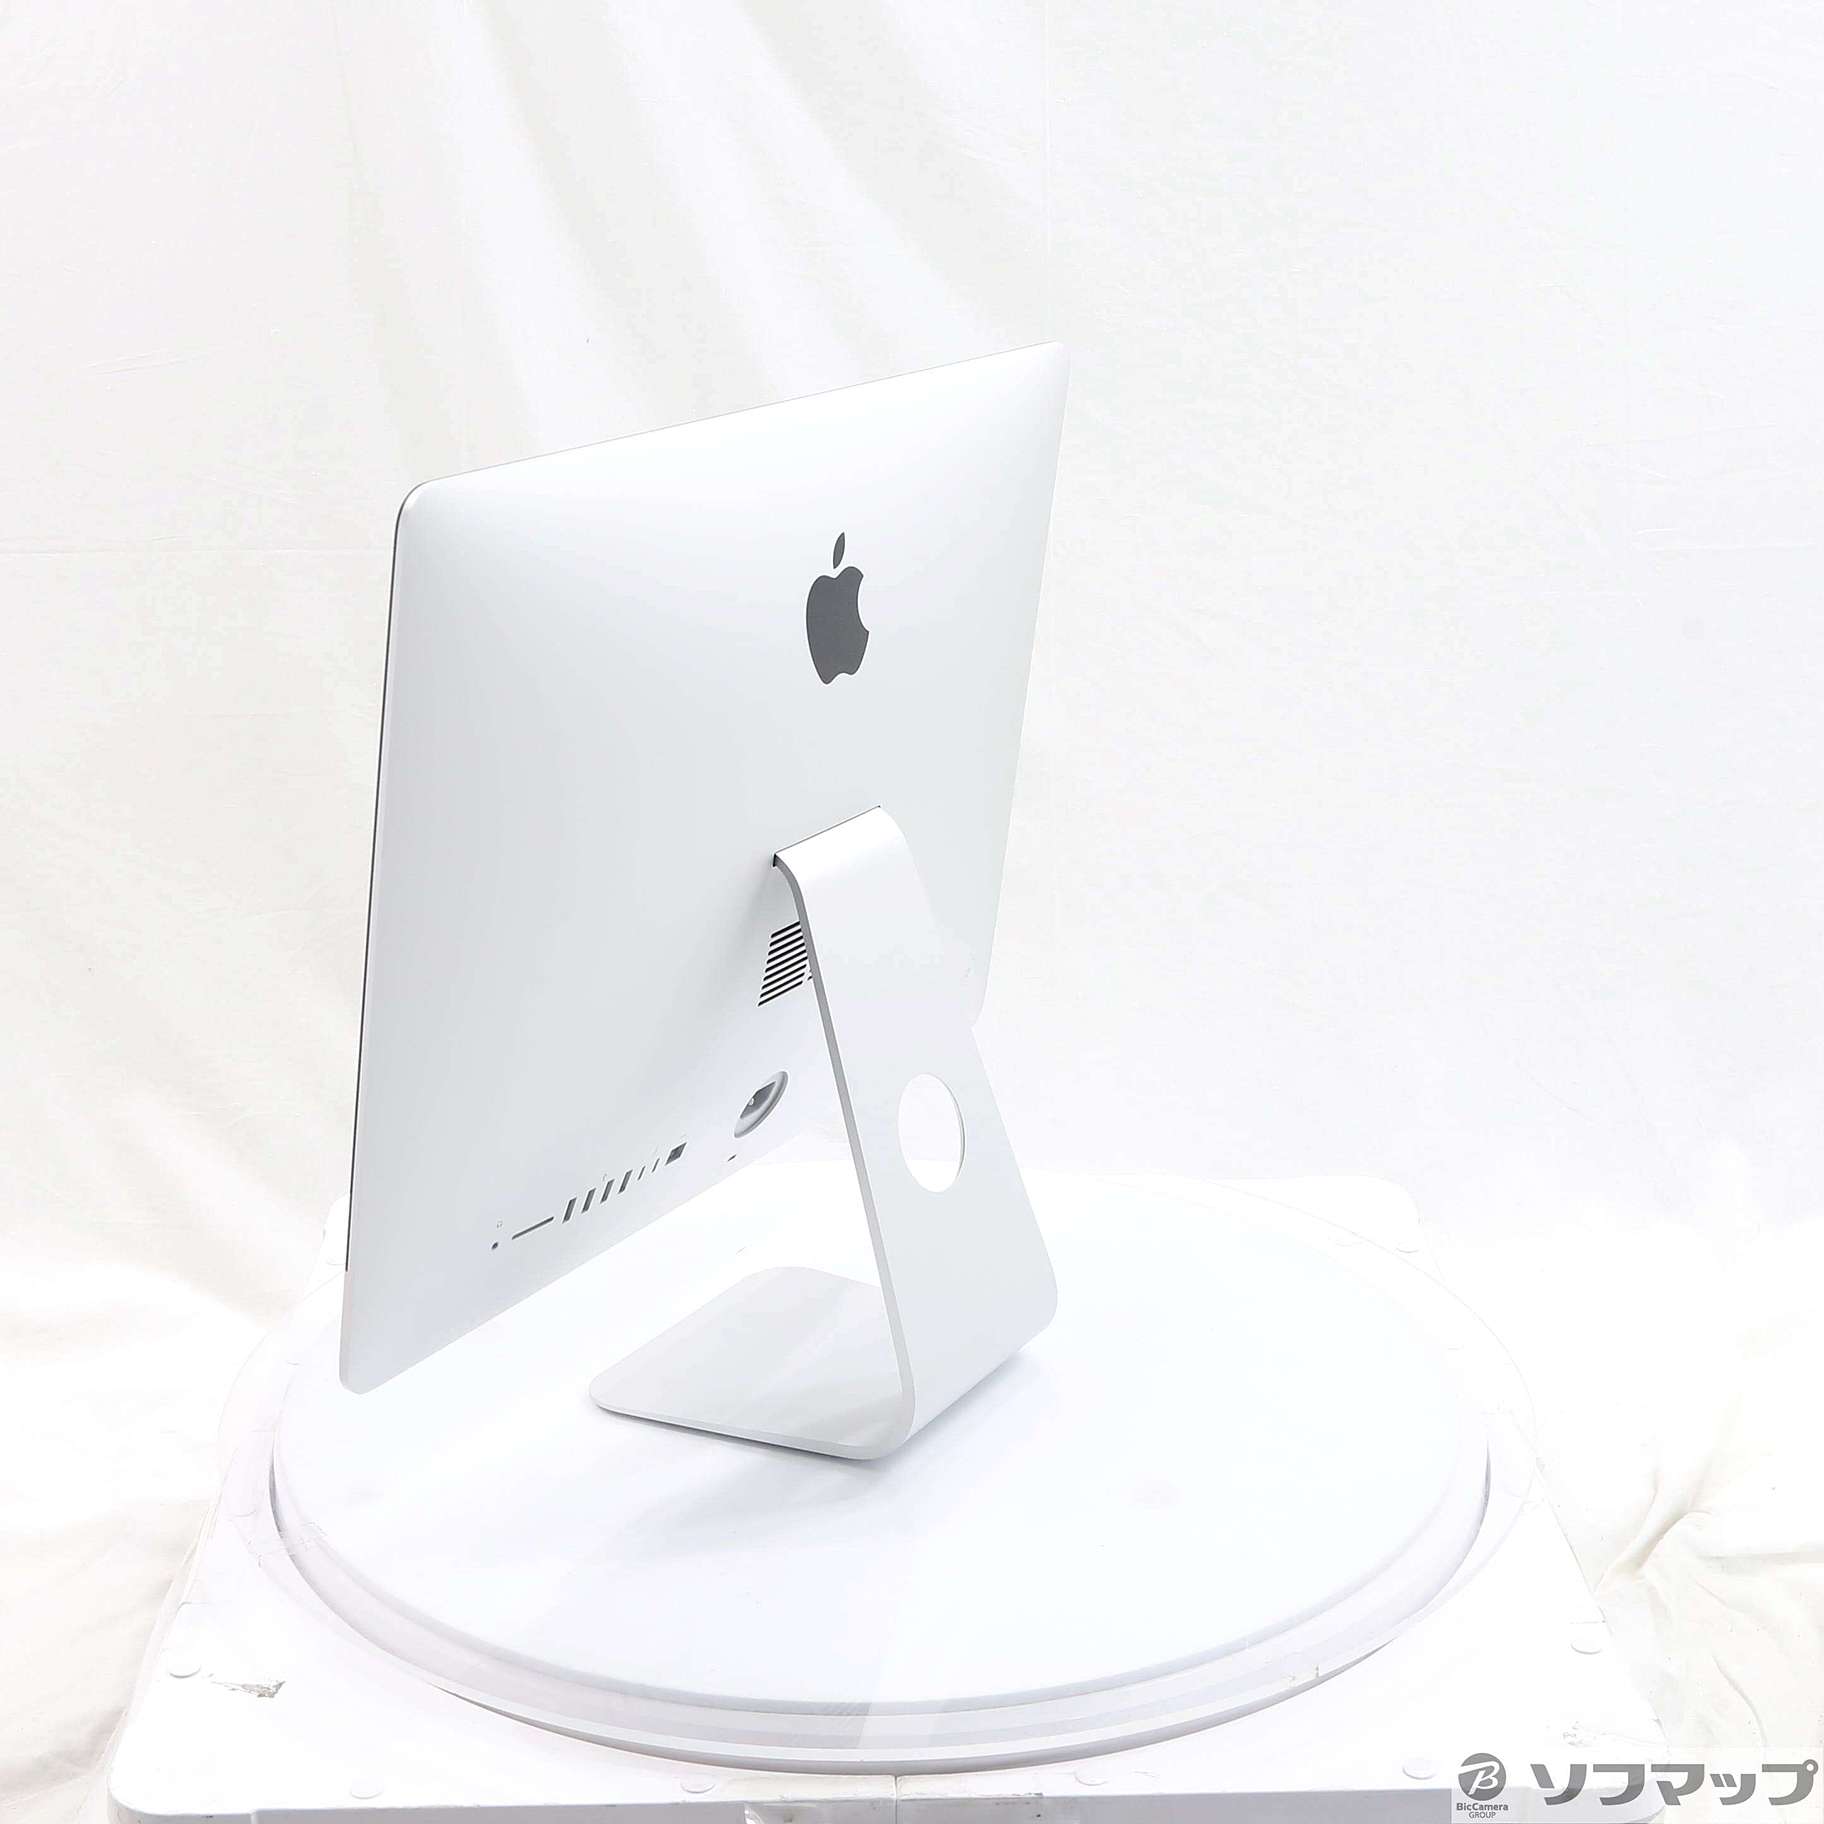 中古】iMac 21.5-inch Mid 2017 MNDY2J／A Core_i5 3GHz 16GB HDD1TB